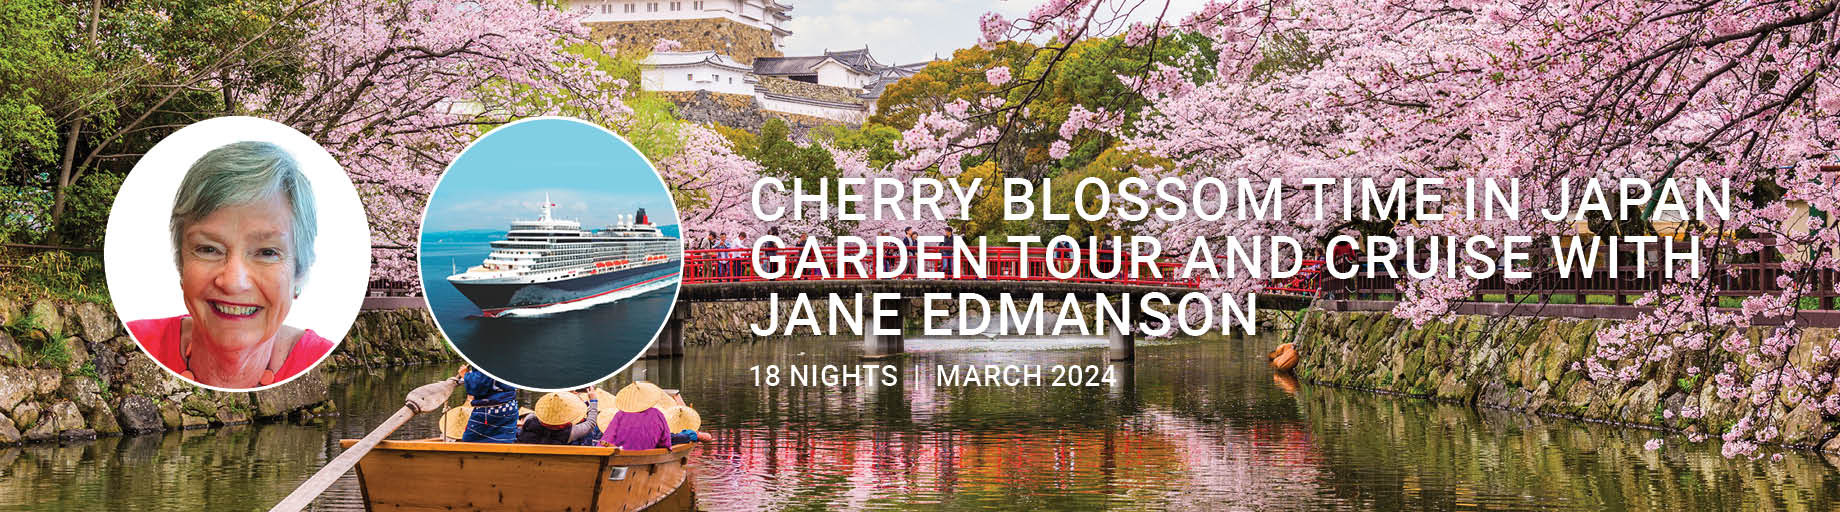 Japan Garden Cruise with Jane Edmanson